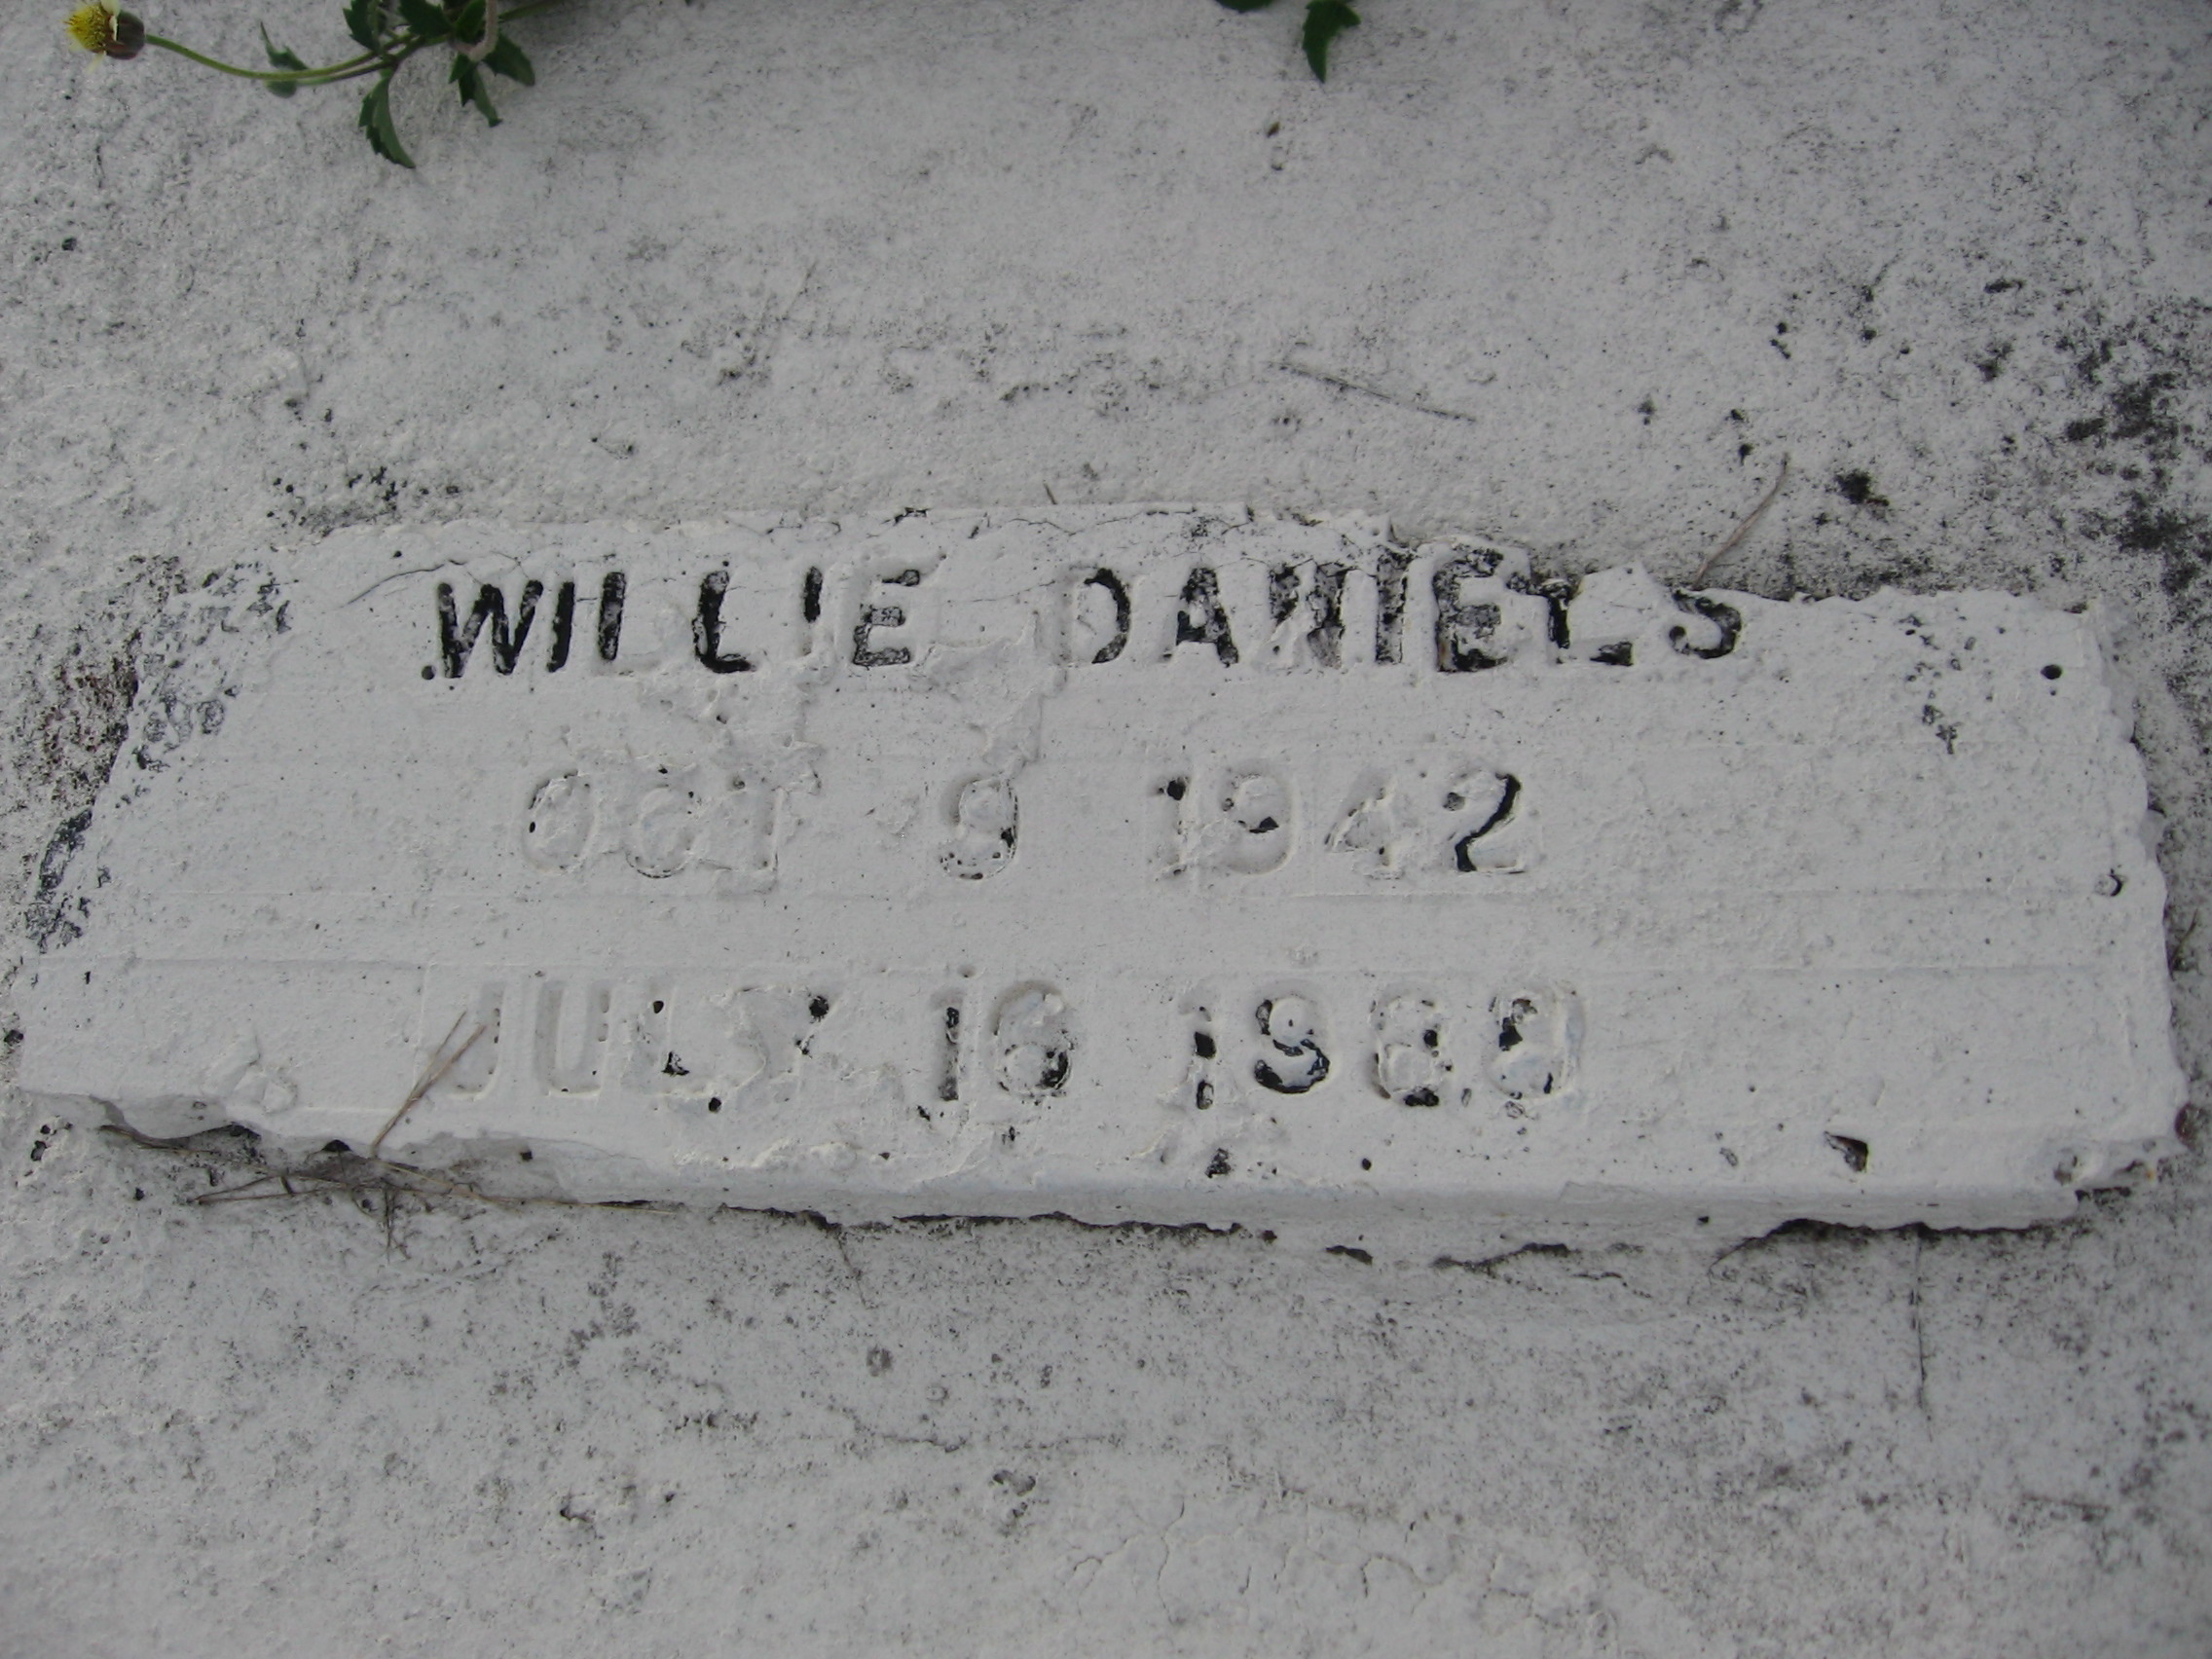 Willie Bee Daniels